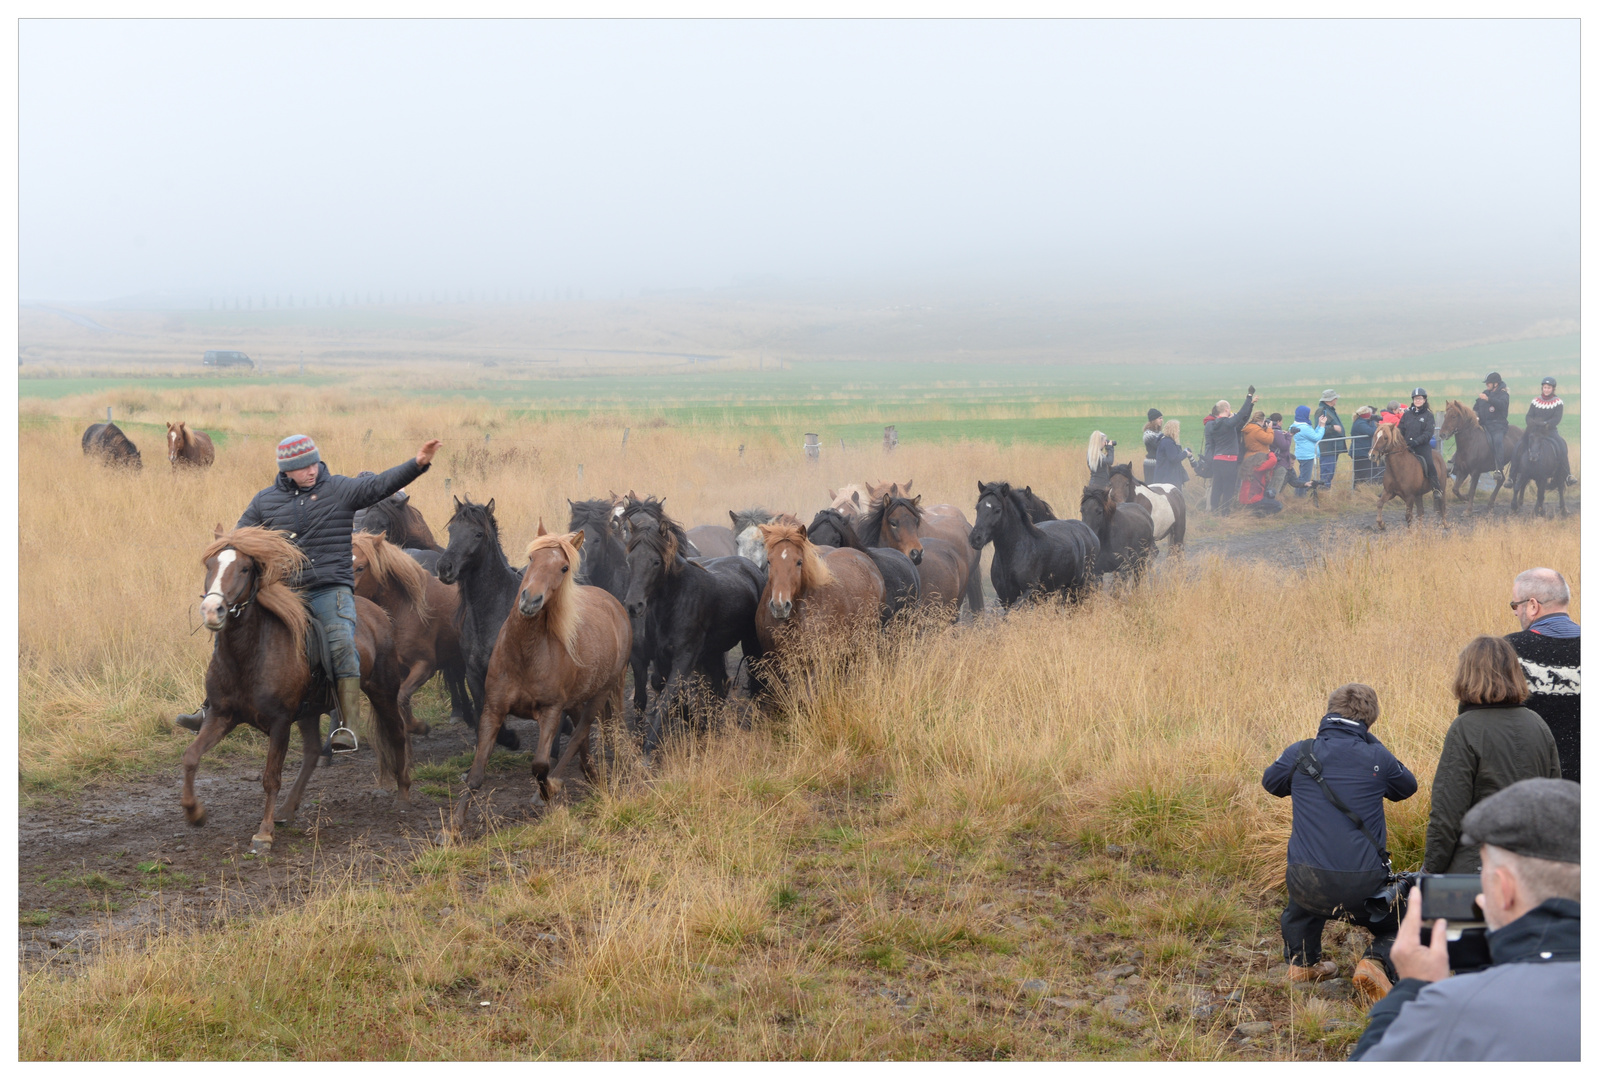 Pferdeabtrieb in Island - 1